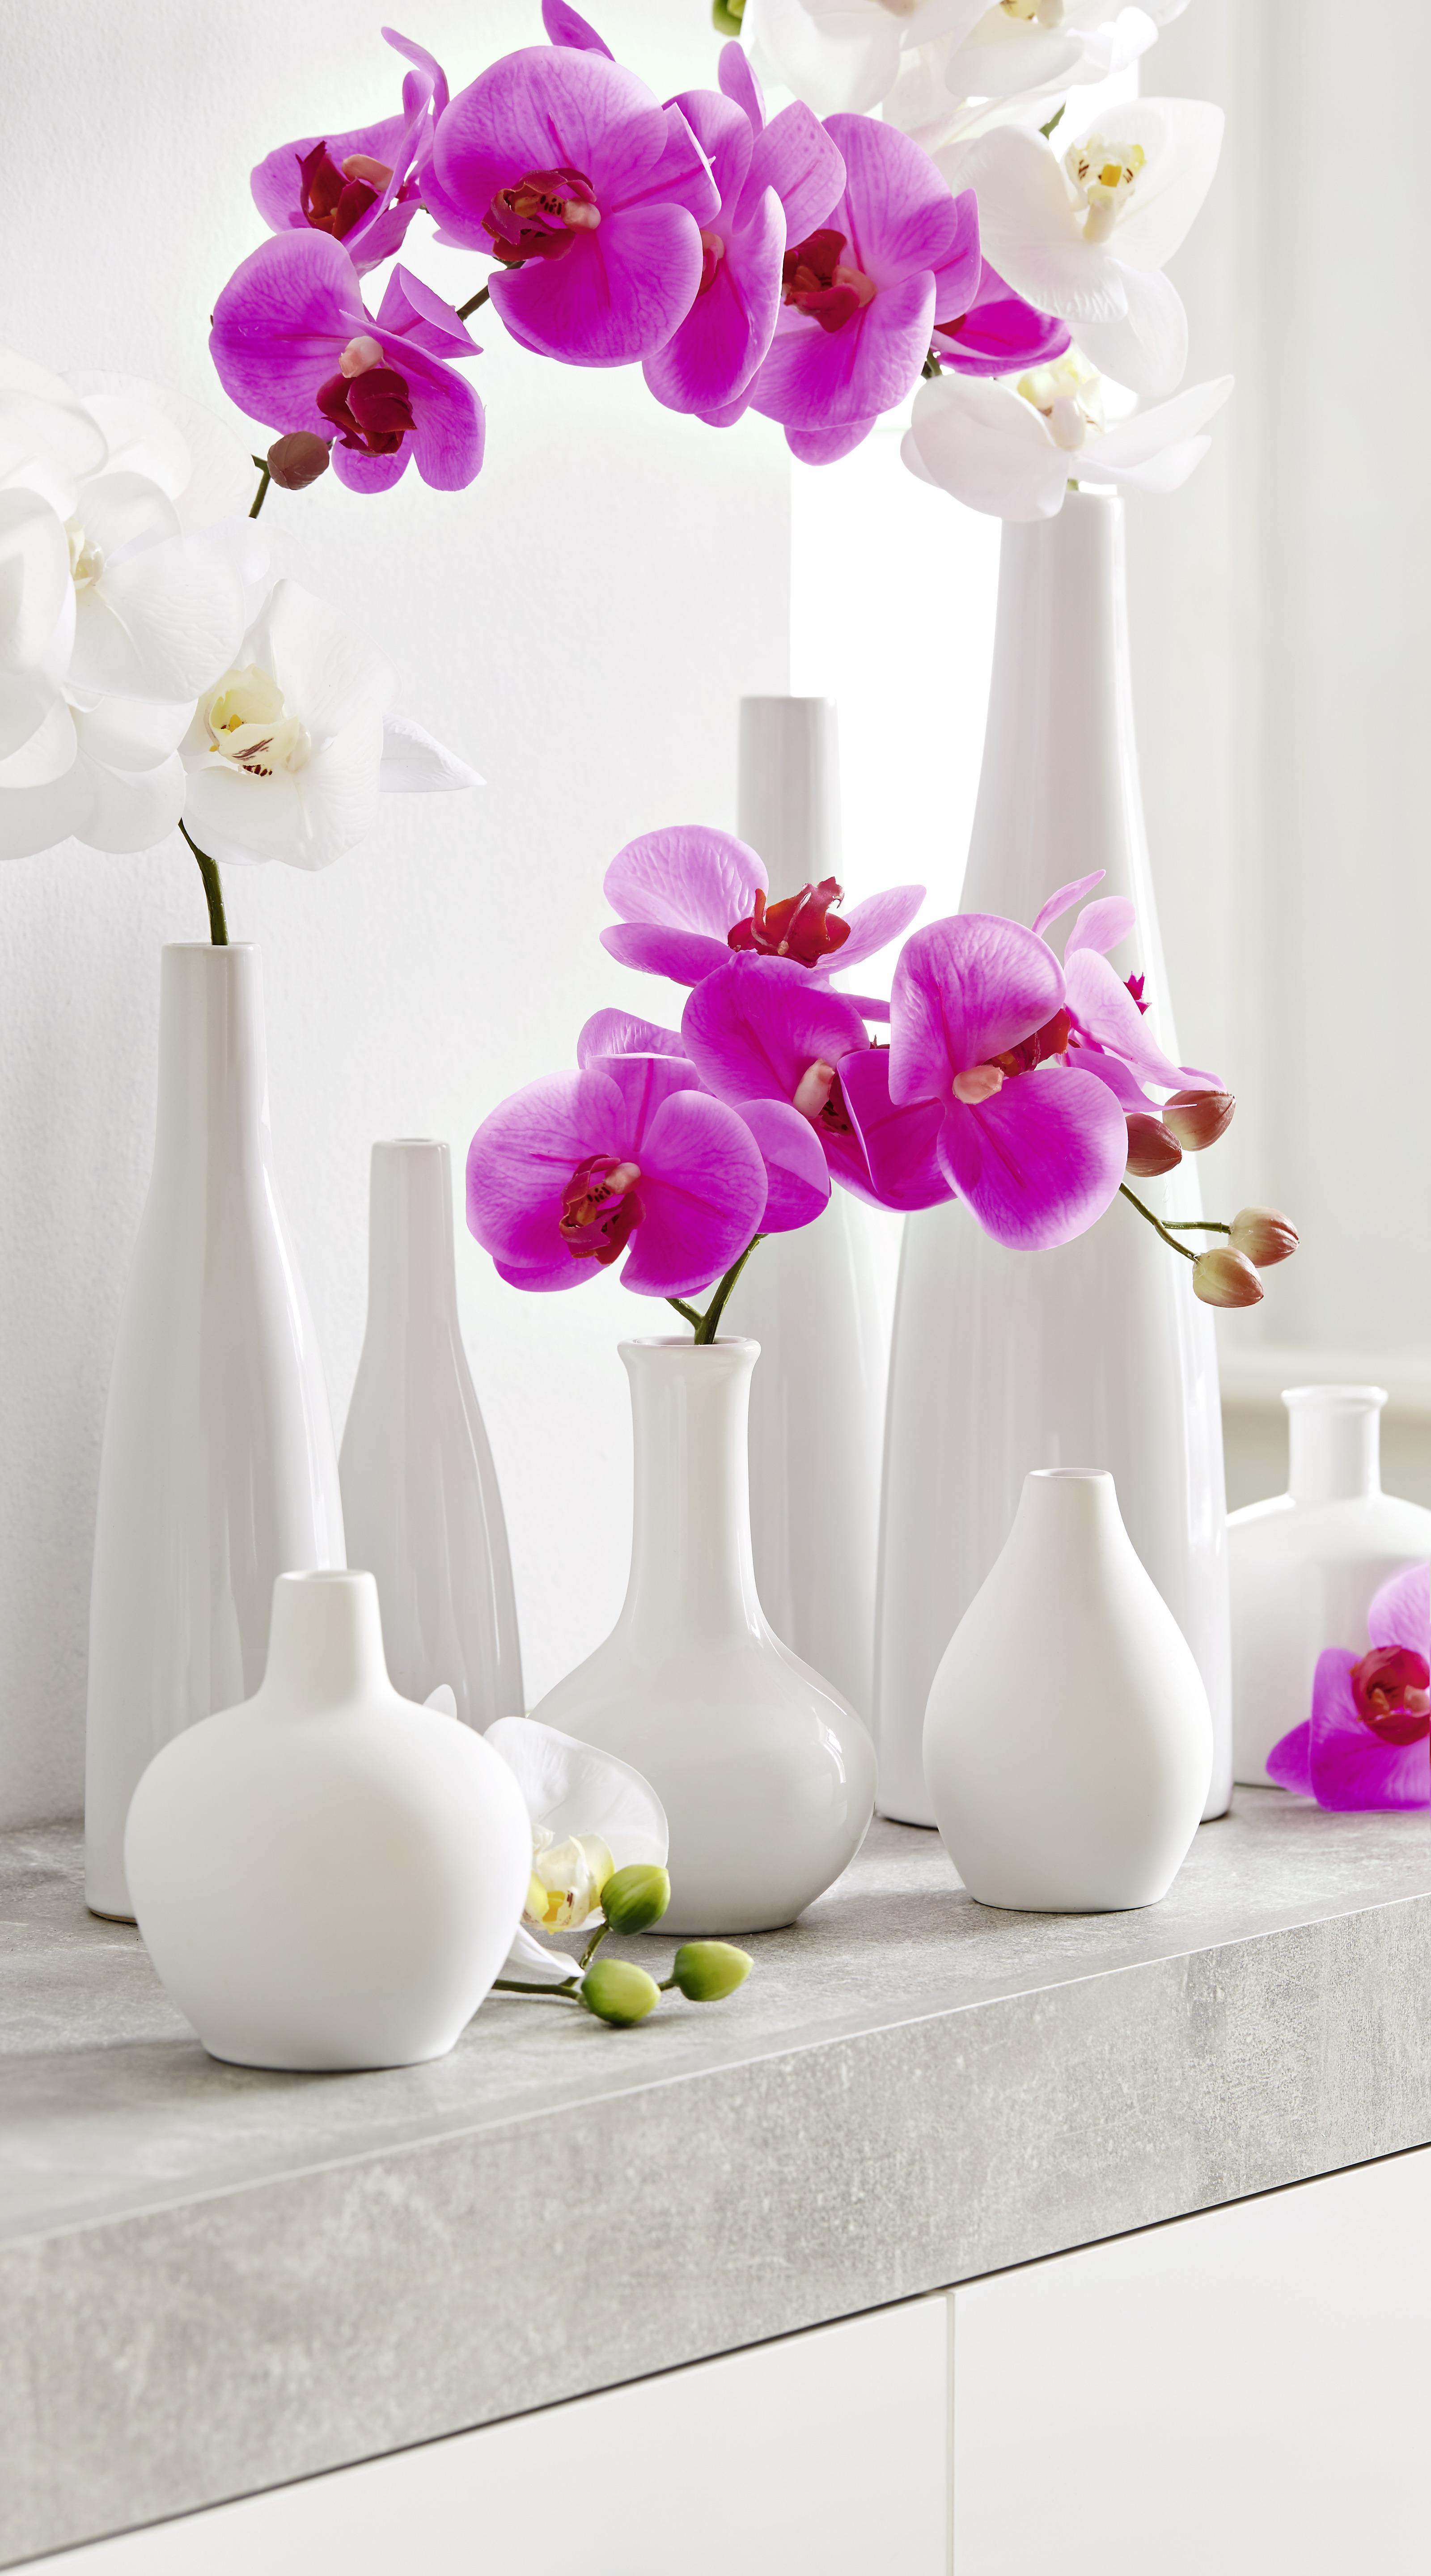 Váza Plancio - biela, Moderný, keramika (8,5/33cm) - Modern Living